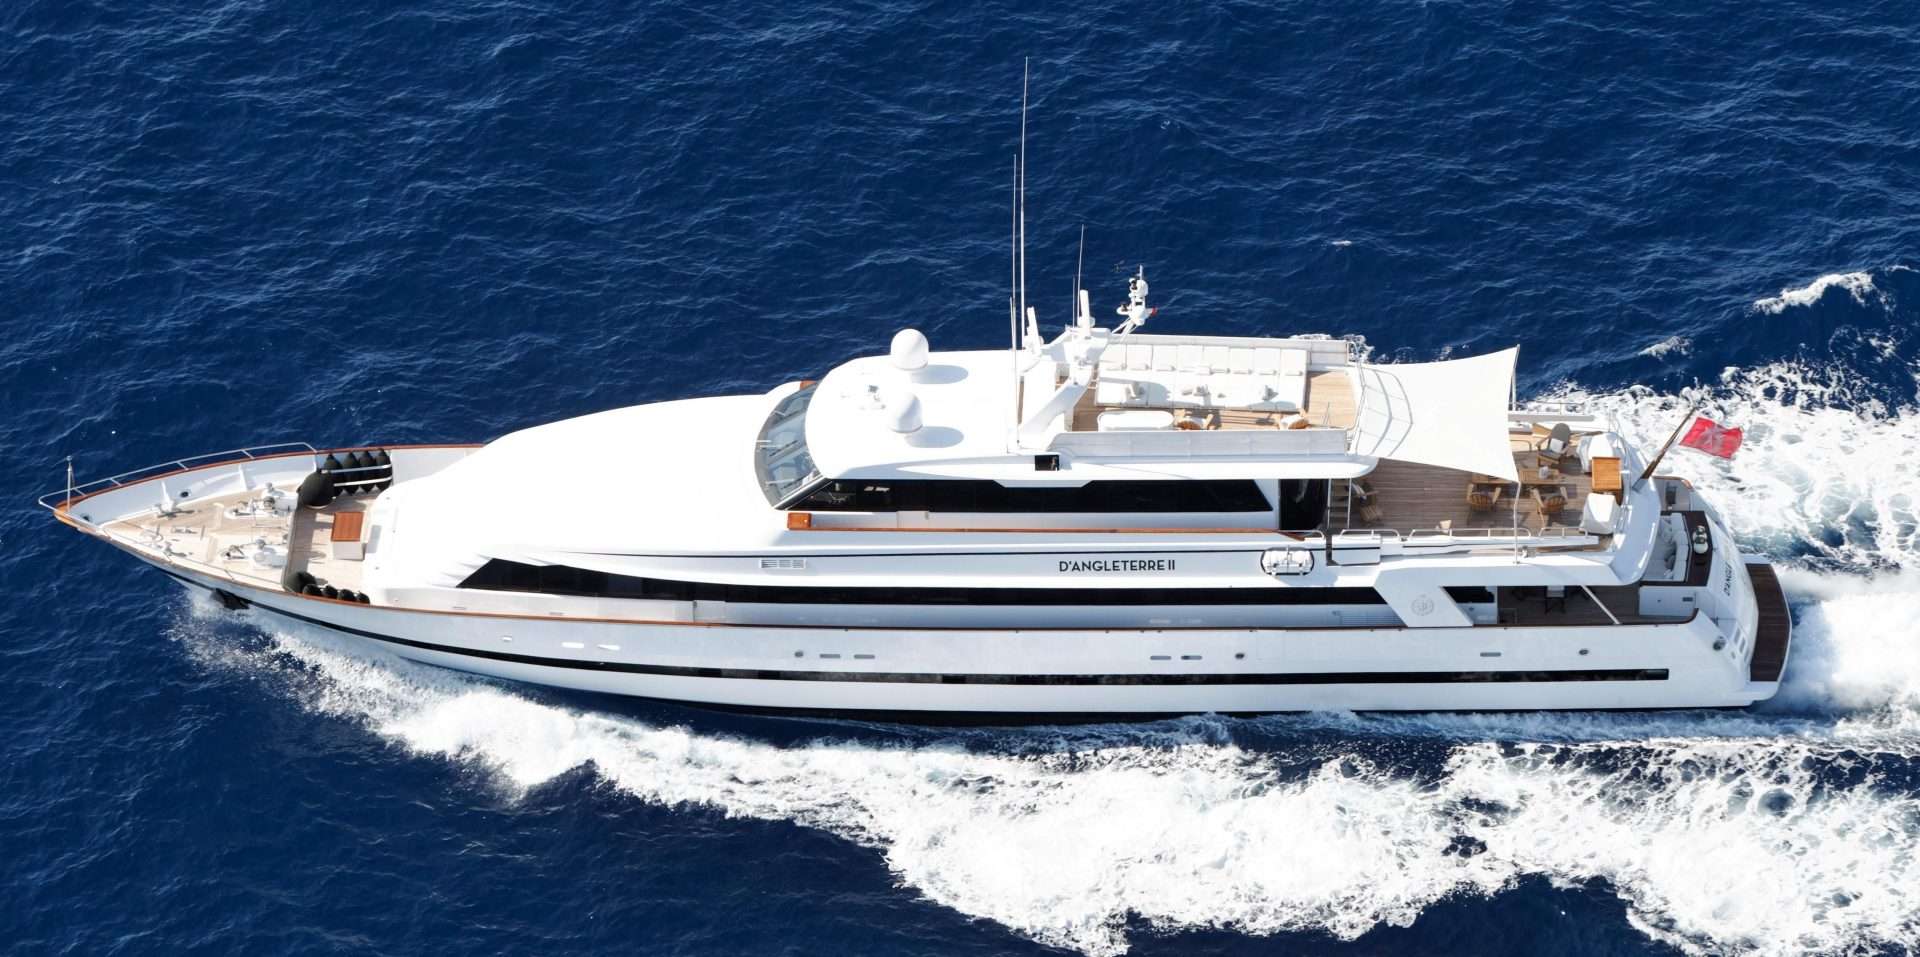 SEA LADY II - Yacht Charter Las Palmas de Gran Canaria & Boat hire in W. Med -Naples/Sicily, W. Med -Riviera/Cors/Sard., W. Med - Spain/Balearics 1